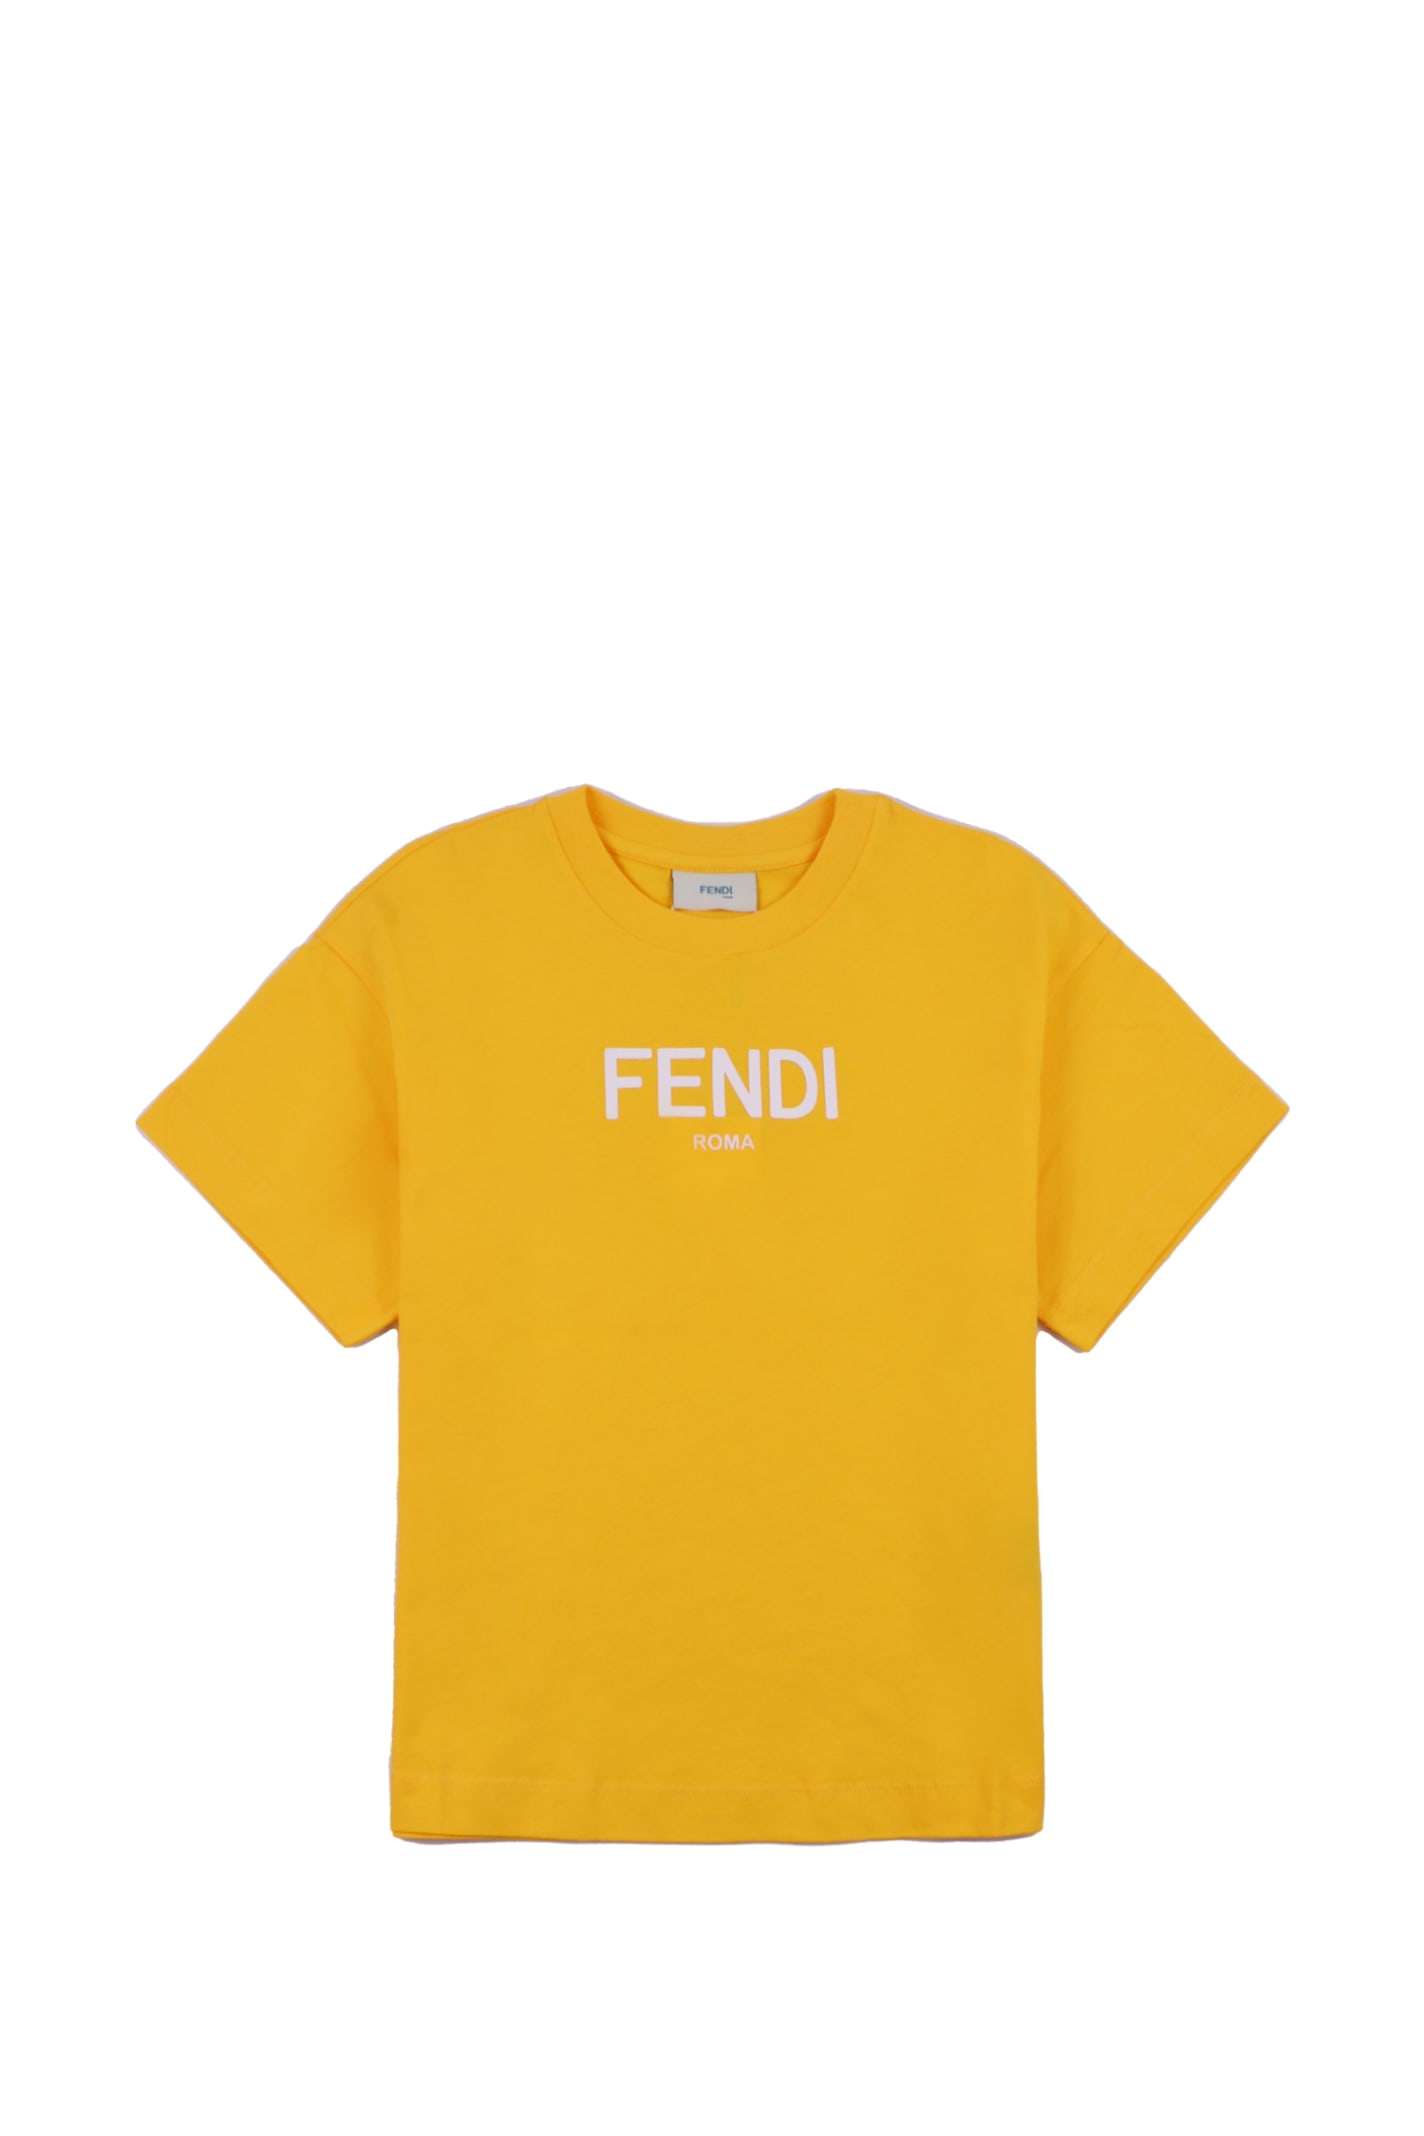 Fendi Printed Tprinted T-shirt-shirt